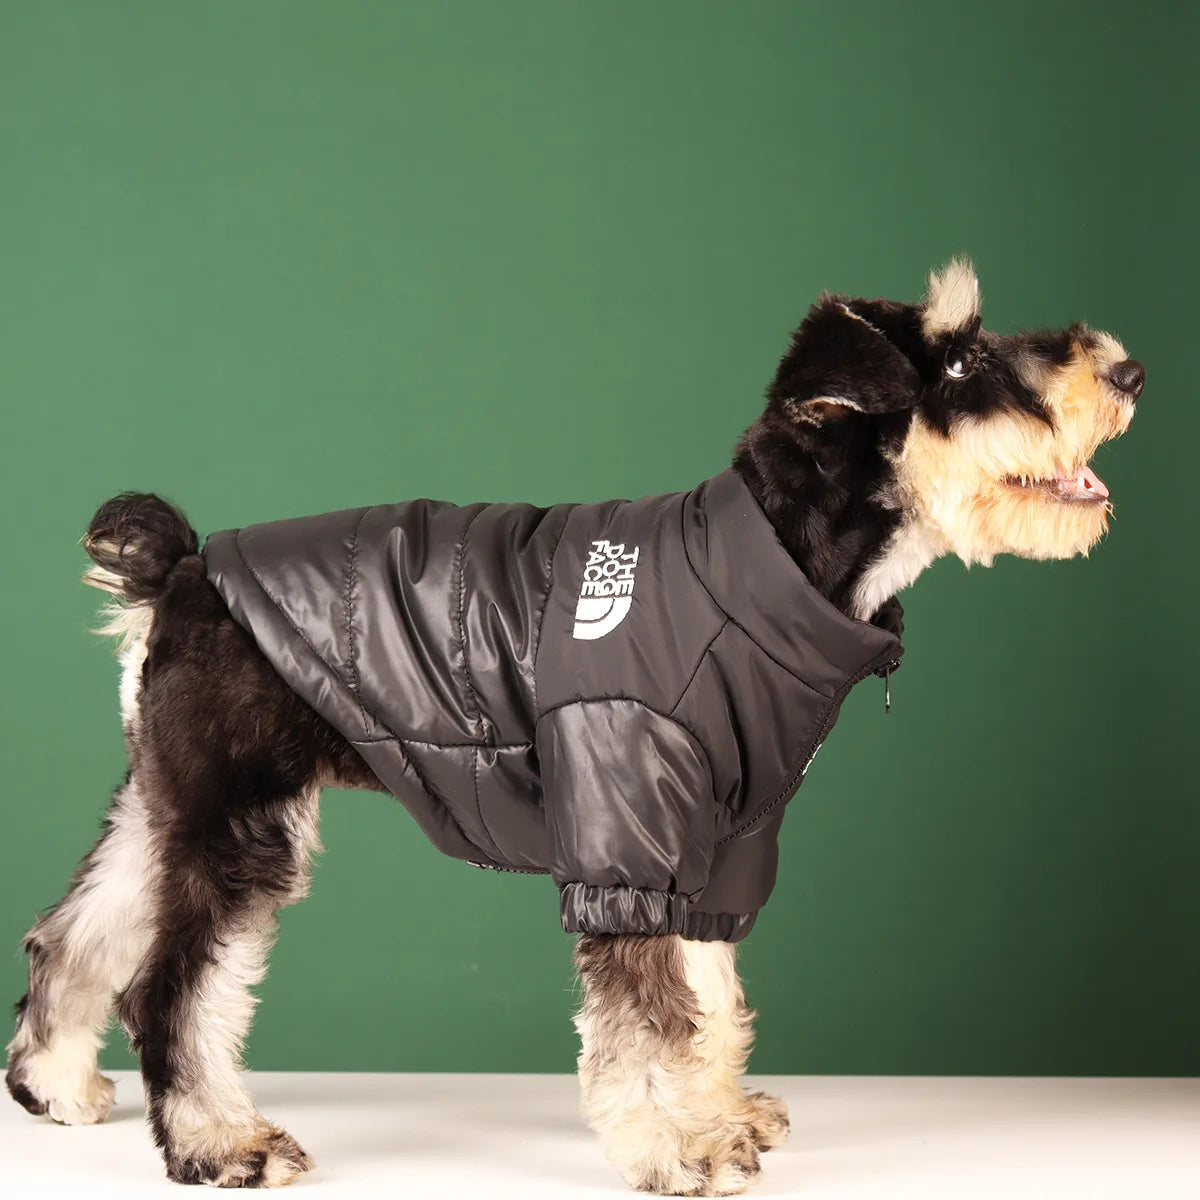 The Dogface Windproof Jacket